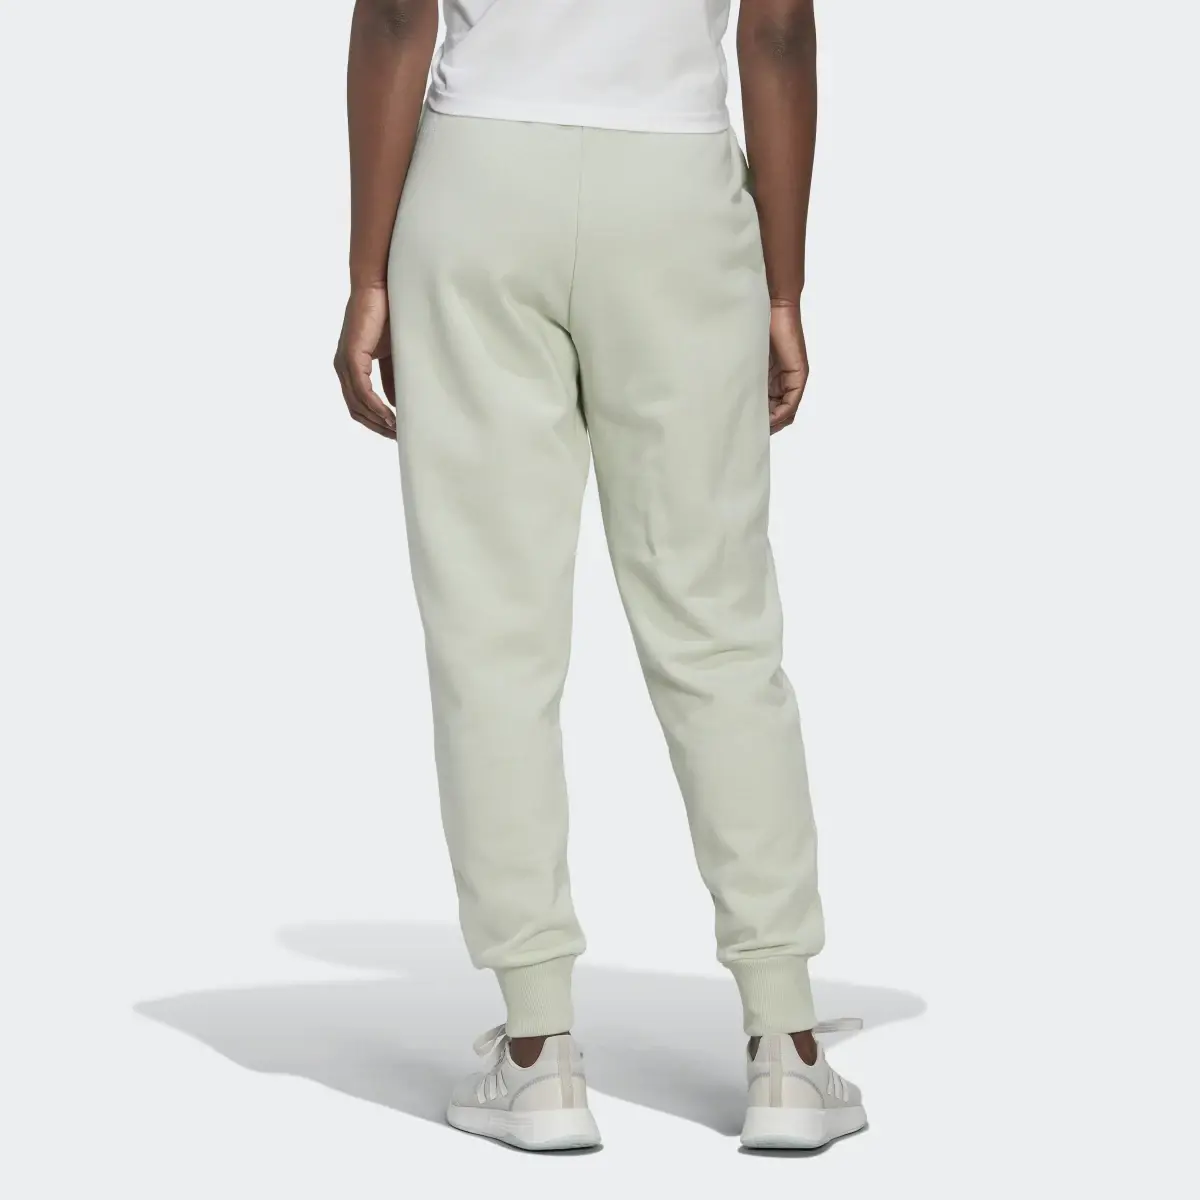 Adidas Essentials Multi-Colored Logo Pants. 2